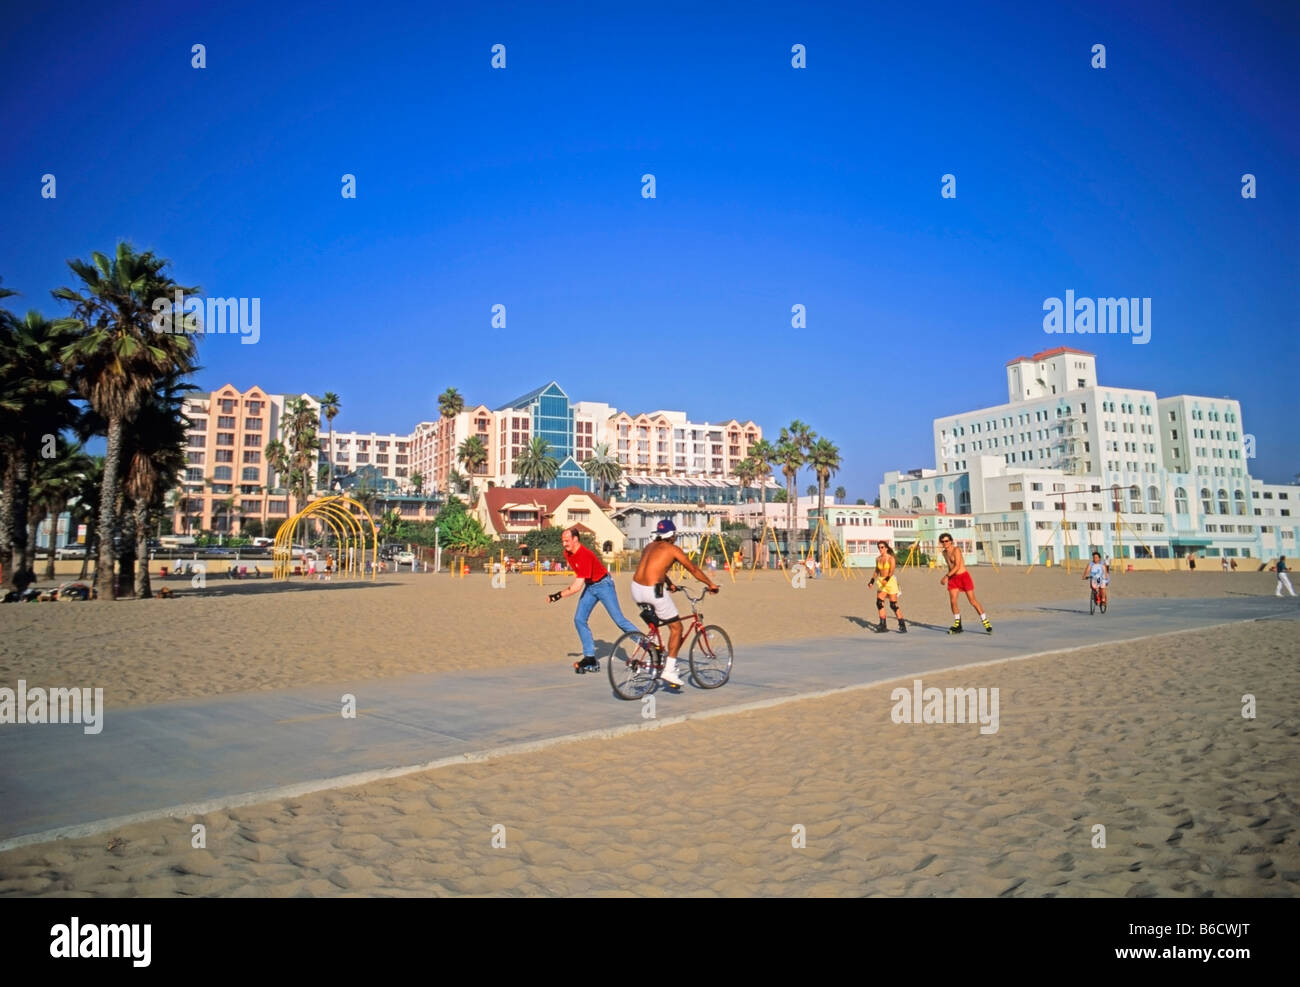 Venice Beach, Los Angeles, USA Banque D'Images